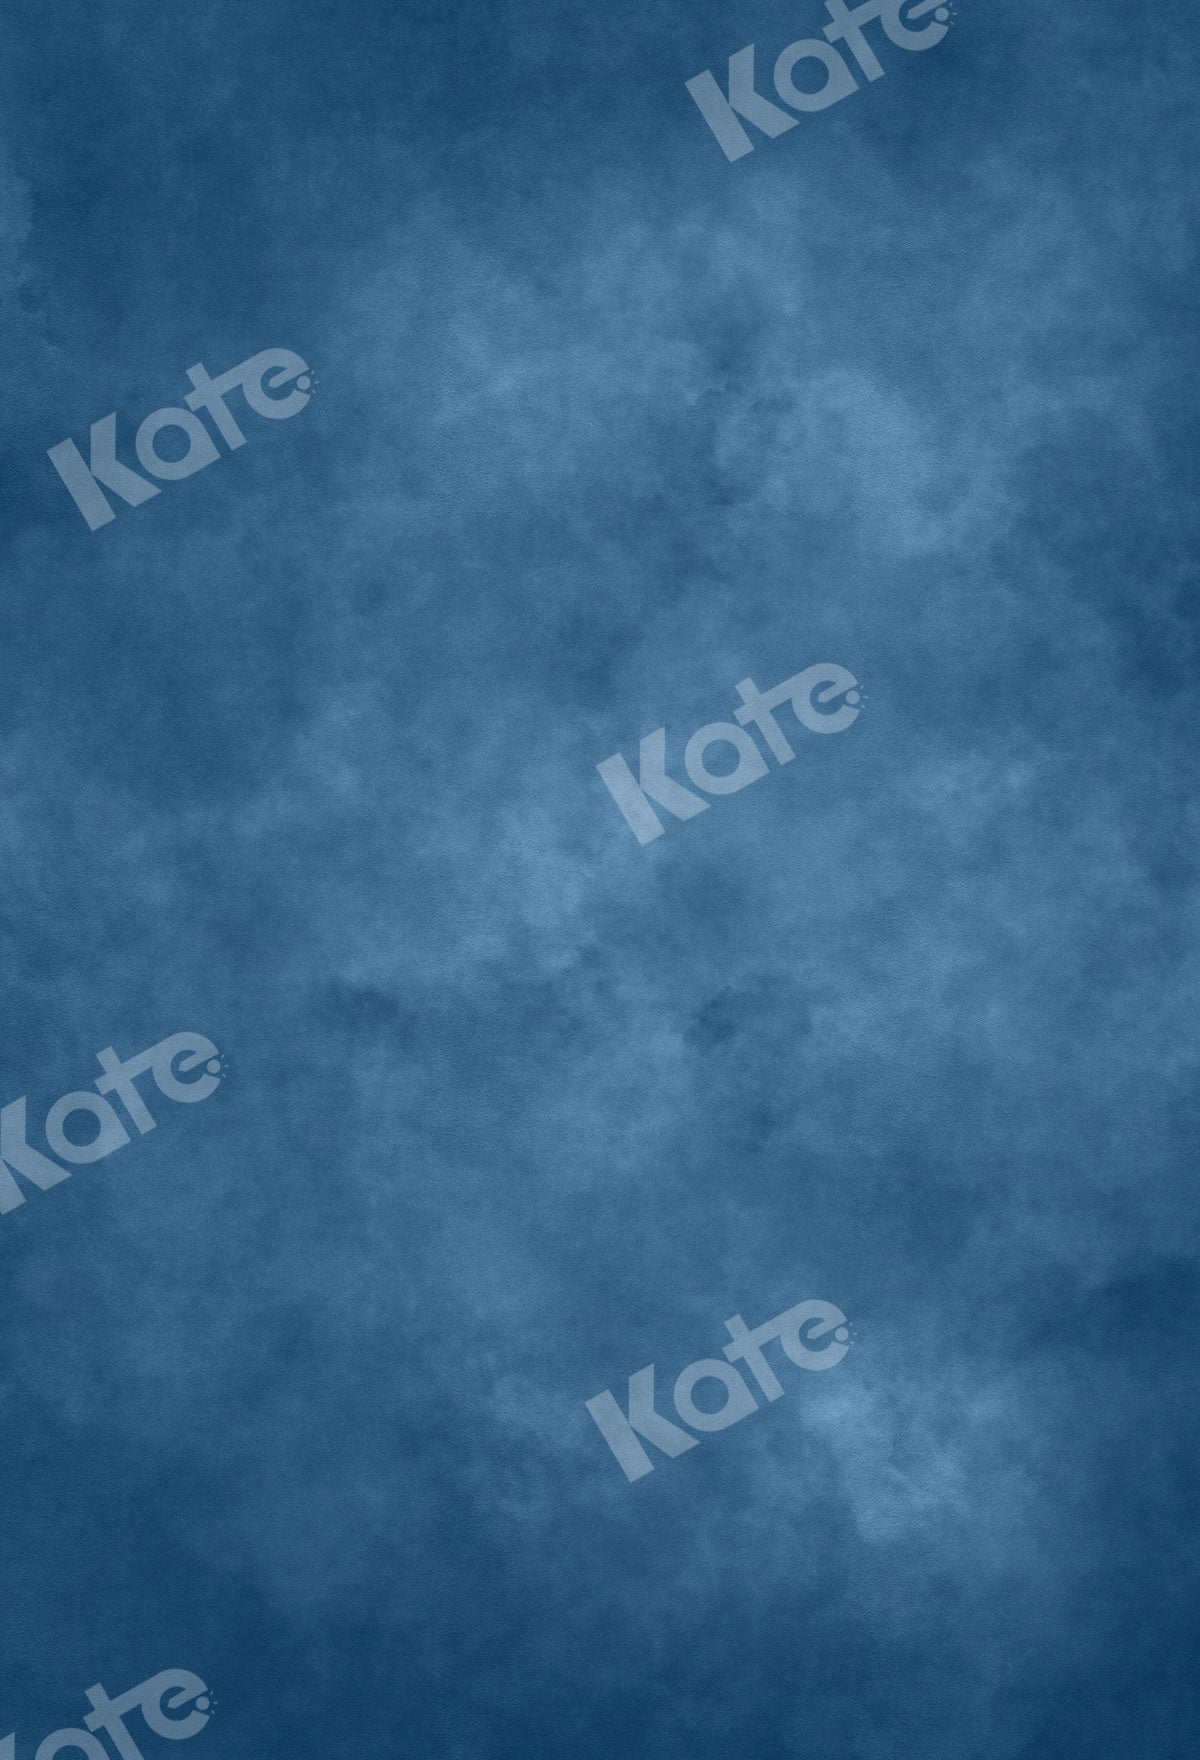 Kate 青色の写真の背景抽象的な背景